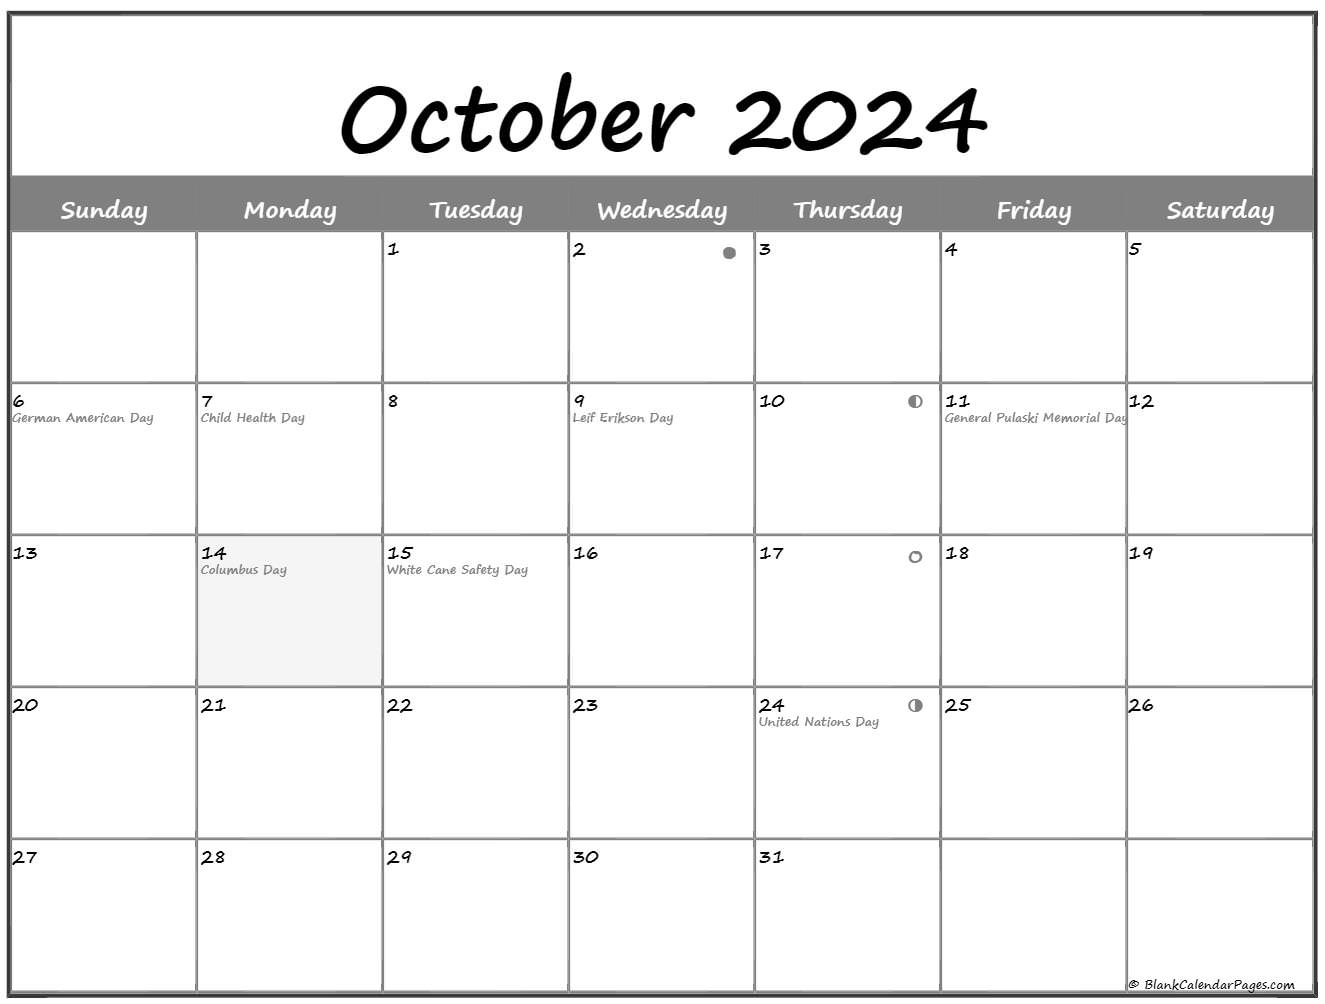 October 2019 Lunar Calendar | Moon Phase Calendar1767 x 1333